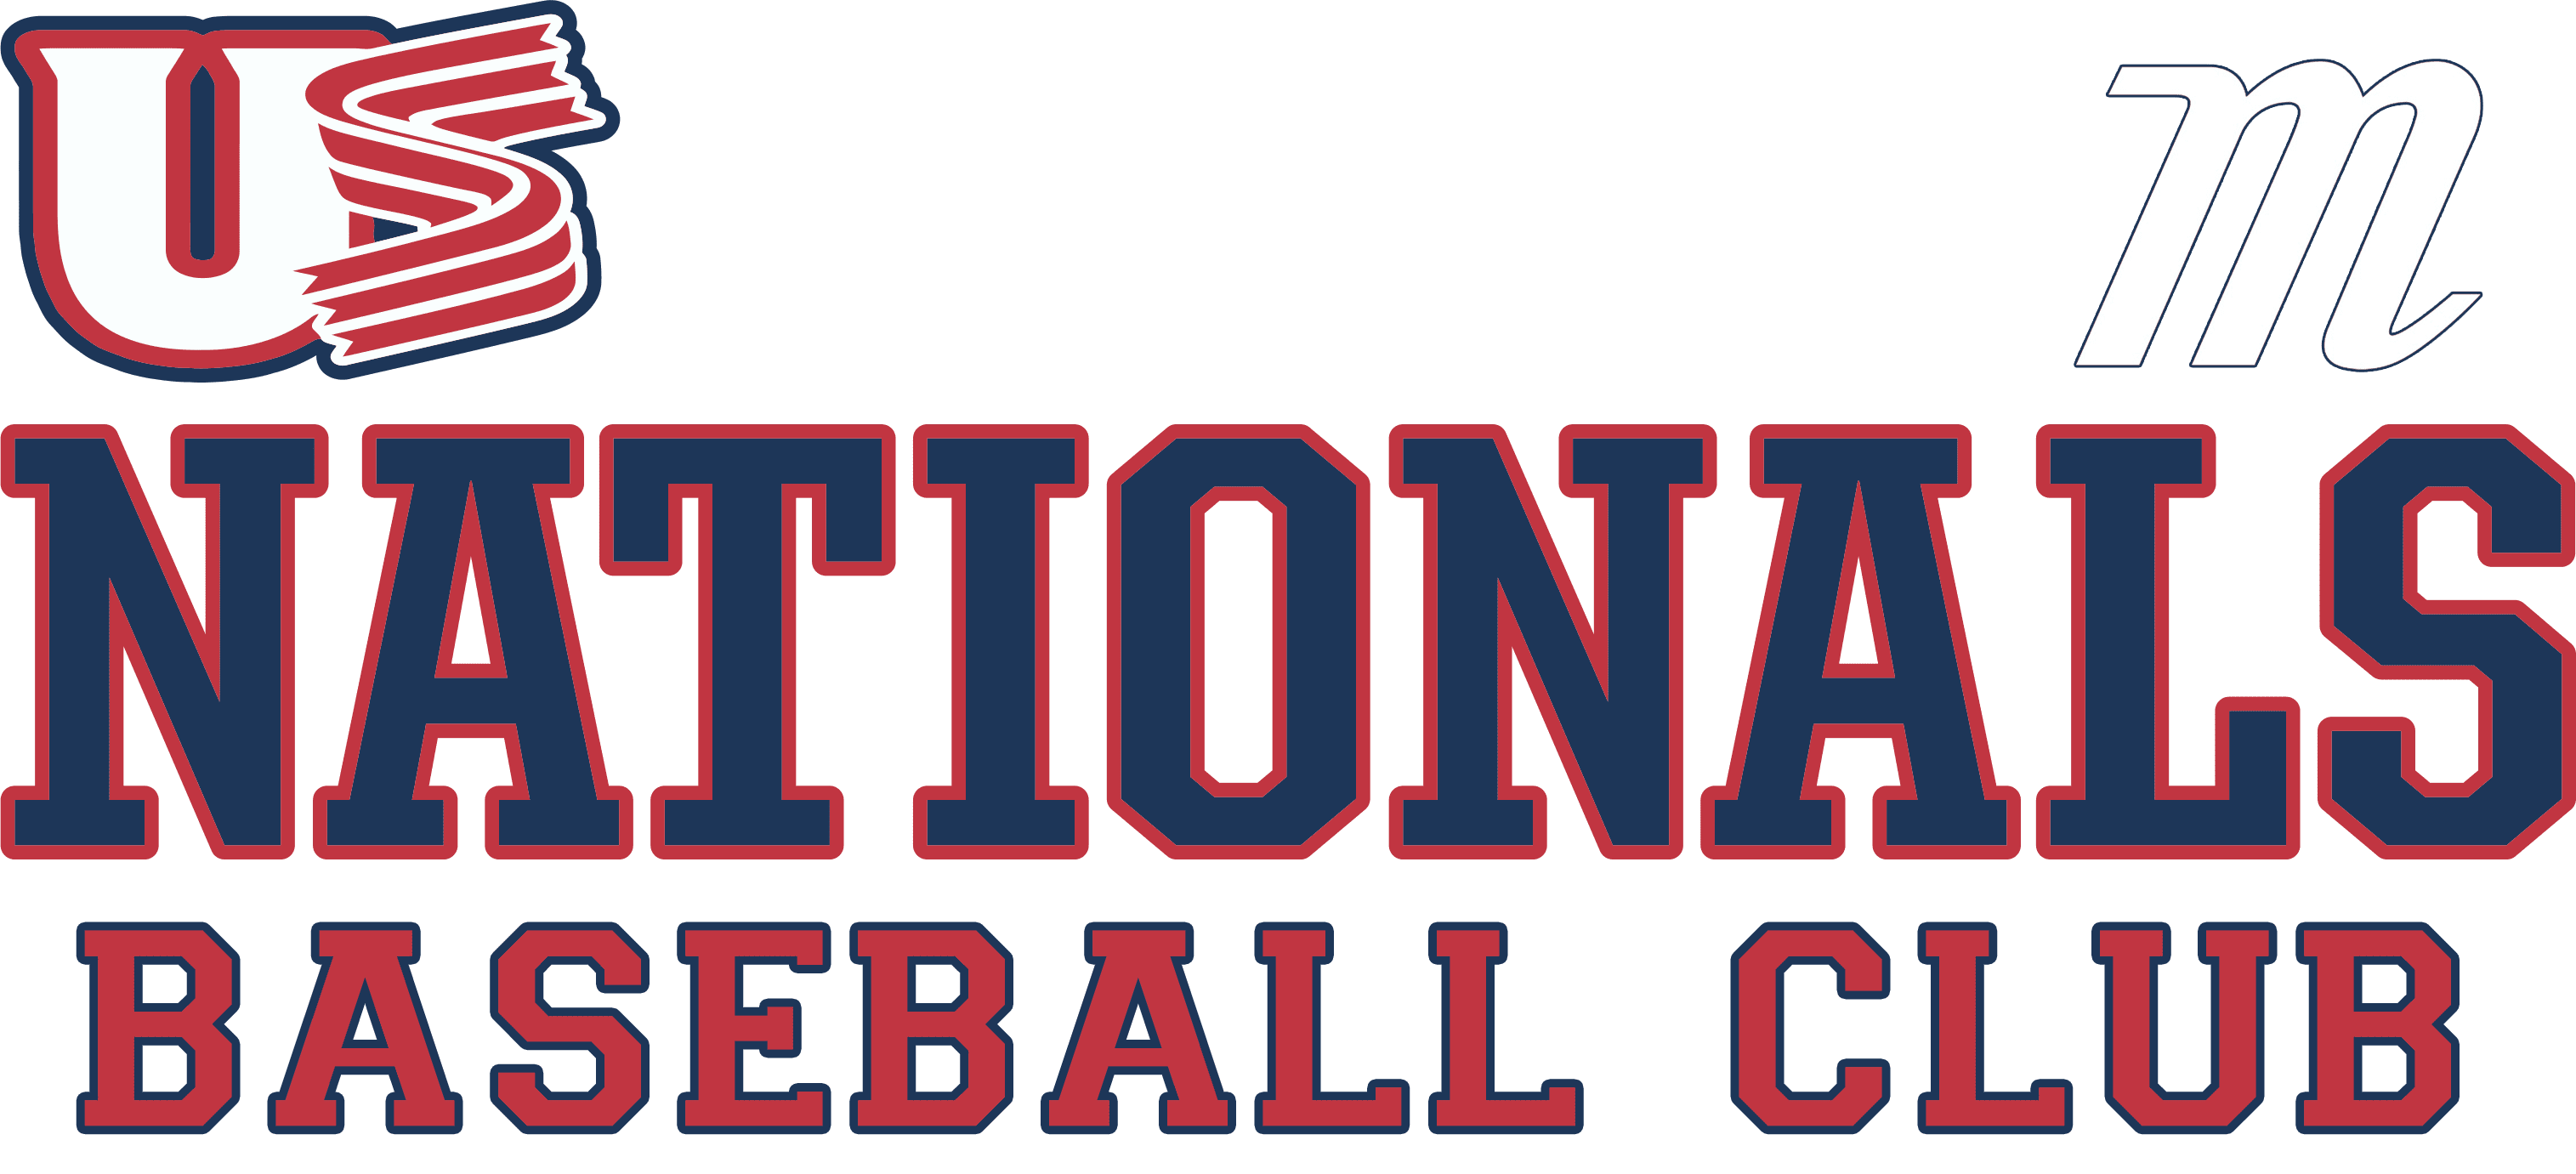 US Nationals Baseball club-Fenton Missouri-BaseballConnected